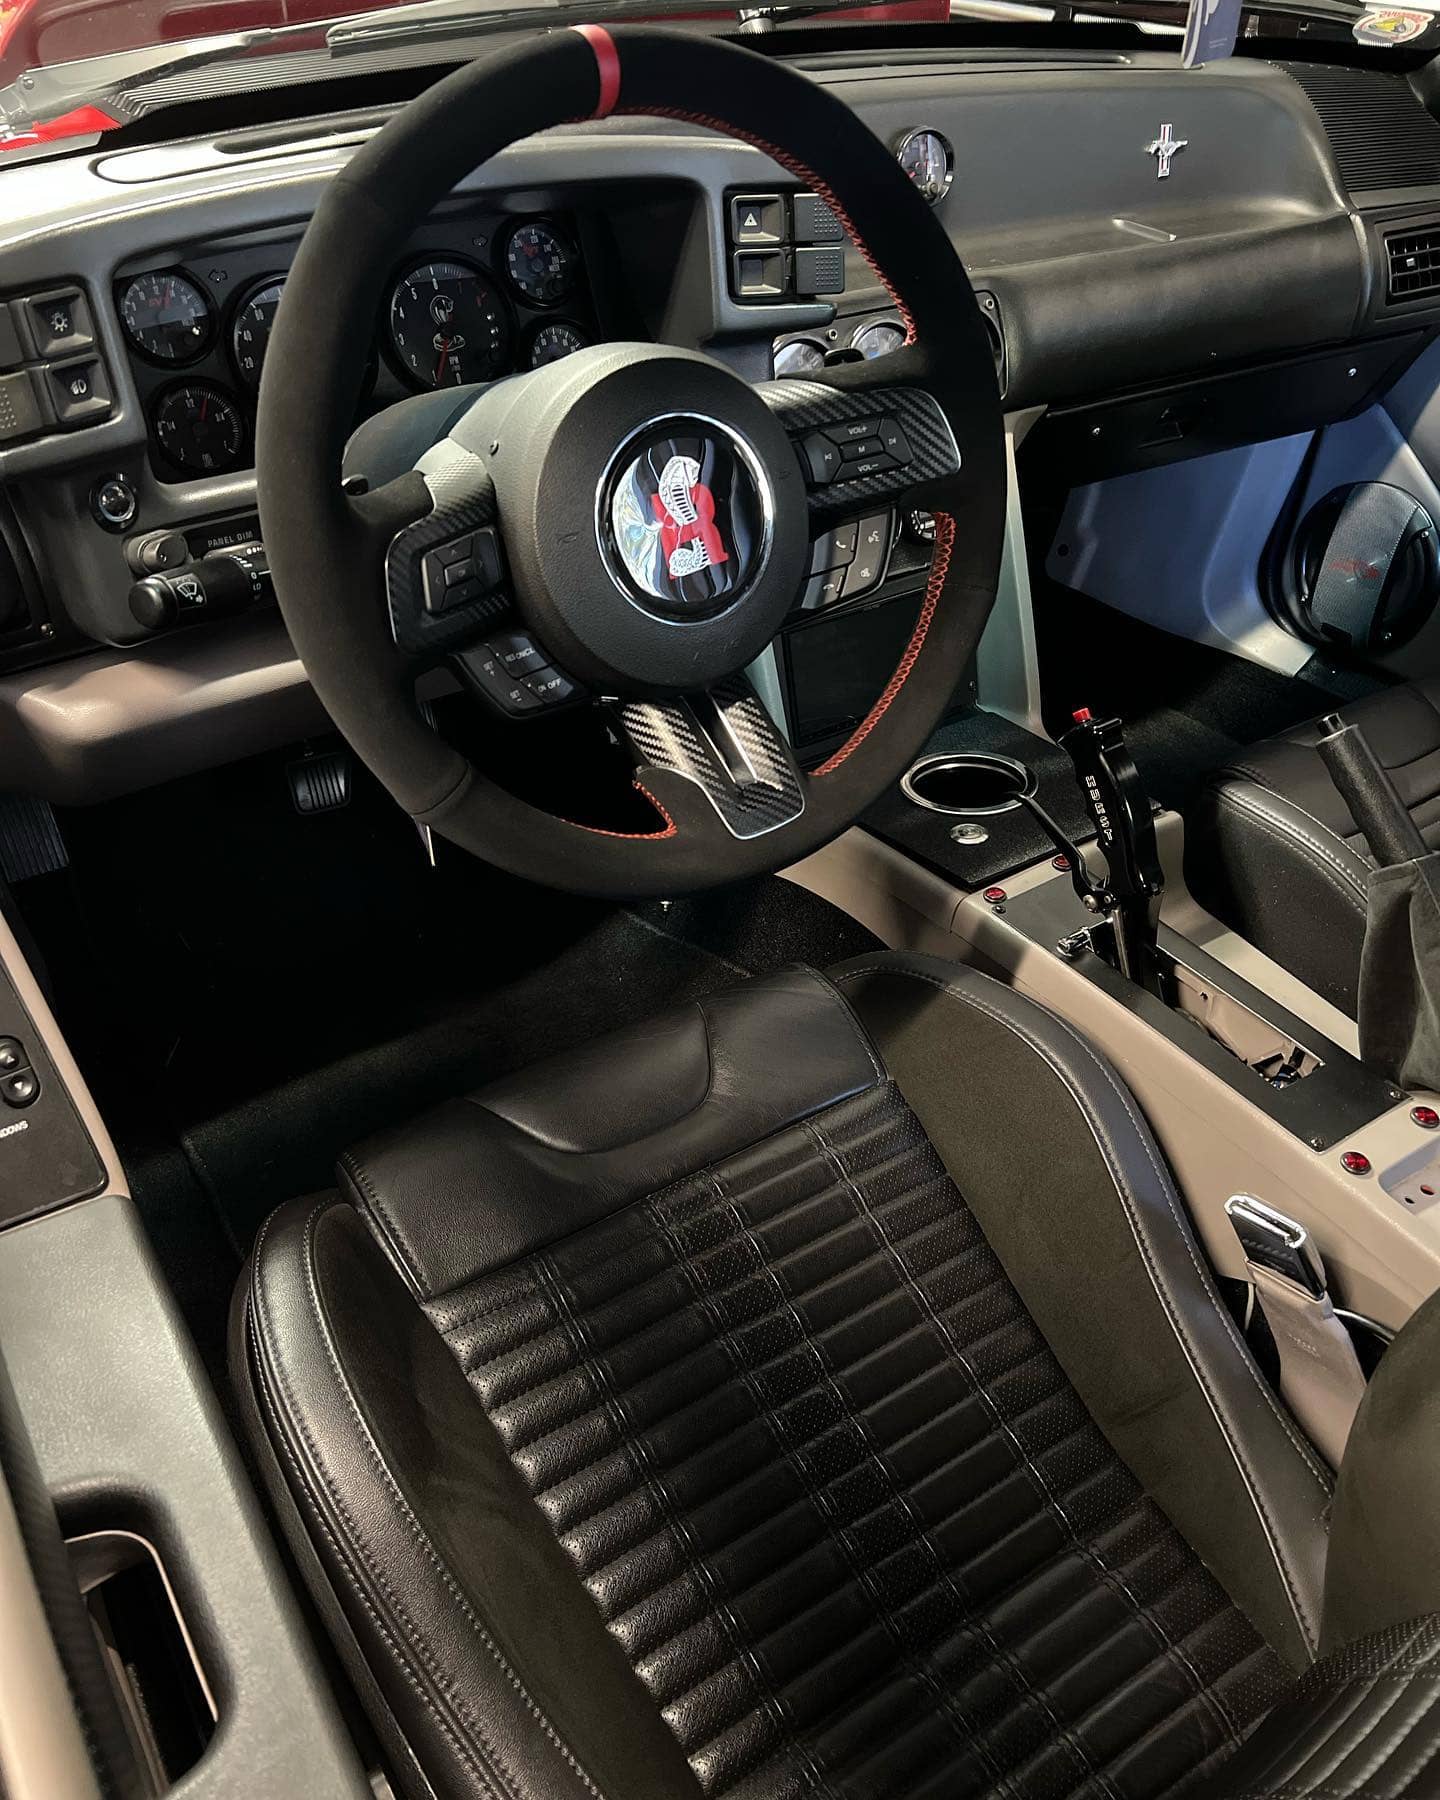 Custom Made 2017 Mustang Steering Wheel, SpeedHut Gauges, 2014 GT500 Recaro Seats.